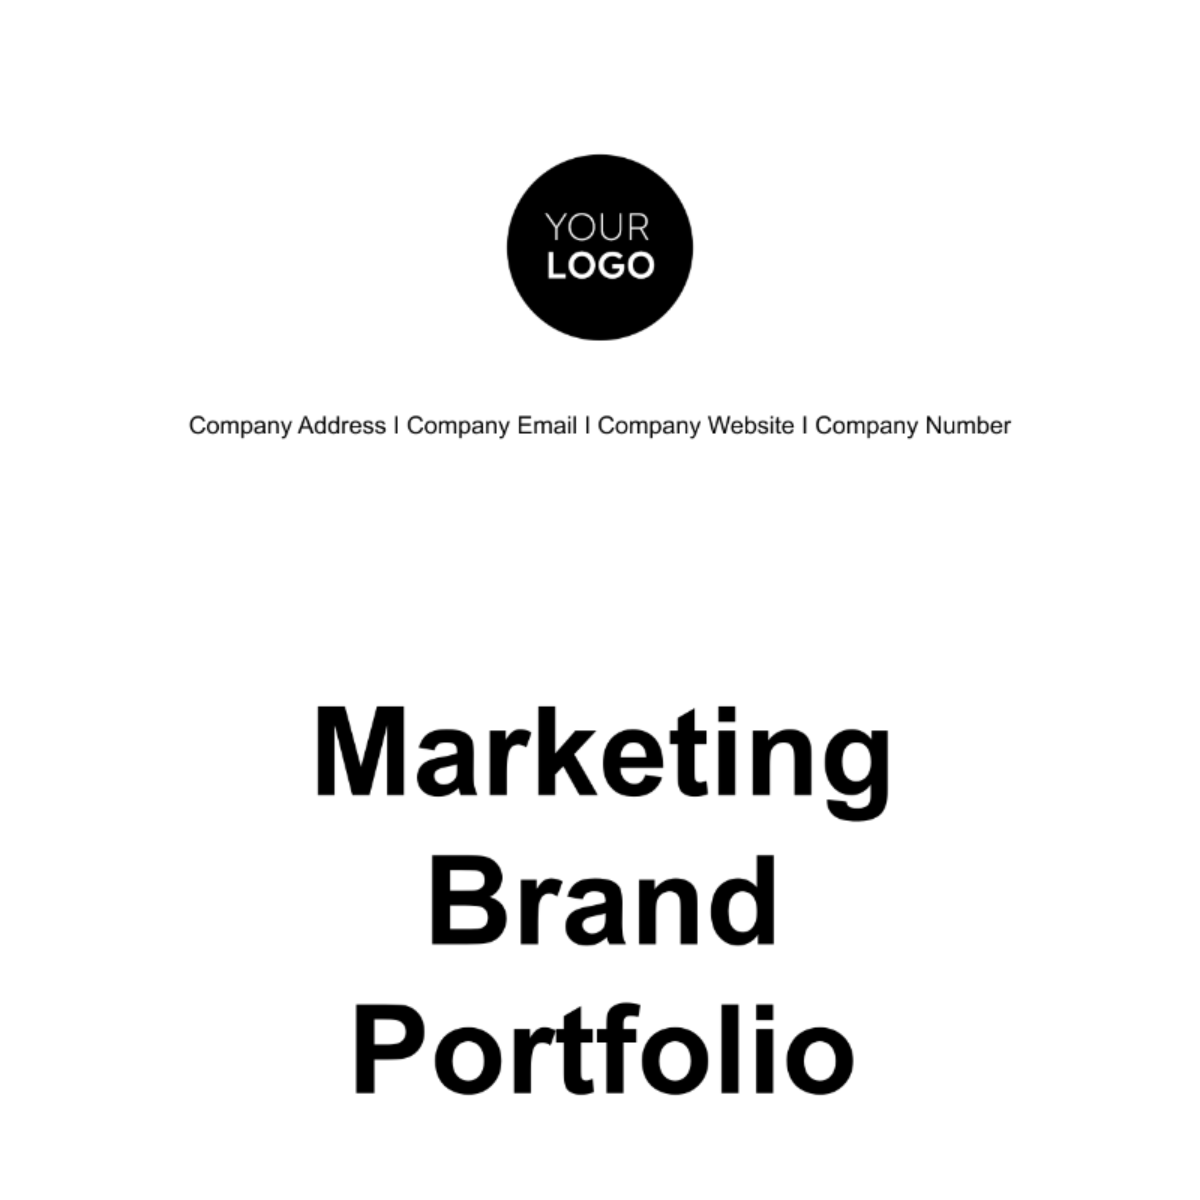 Marketing Brand Portfolio Template